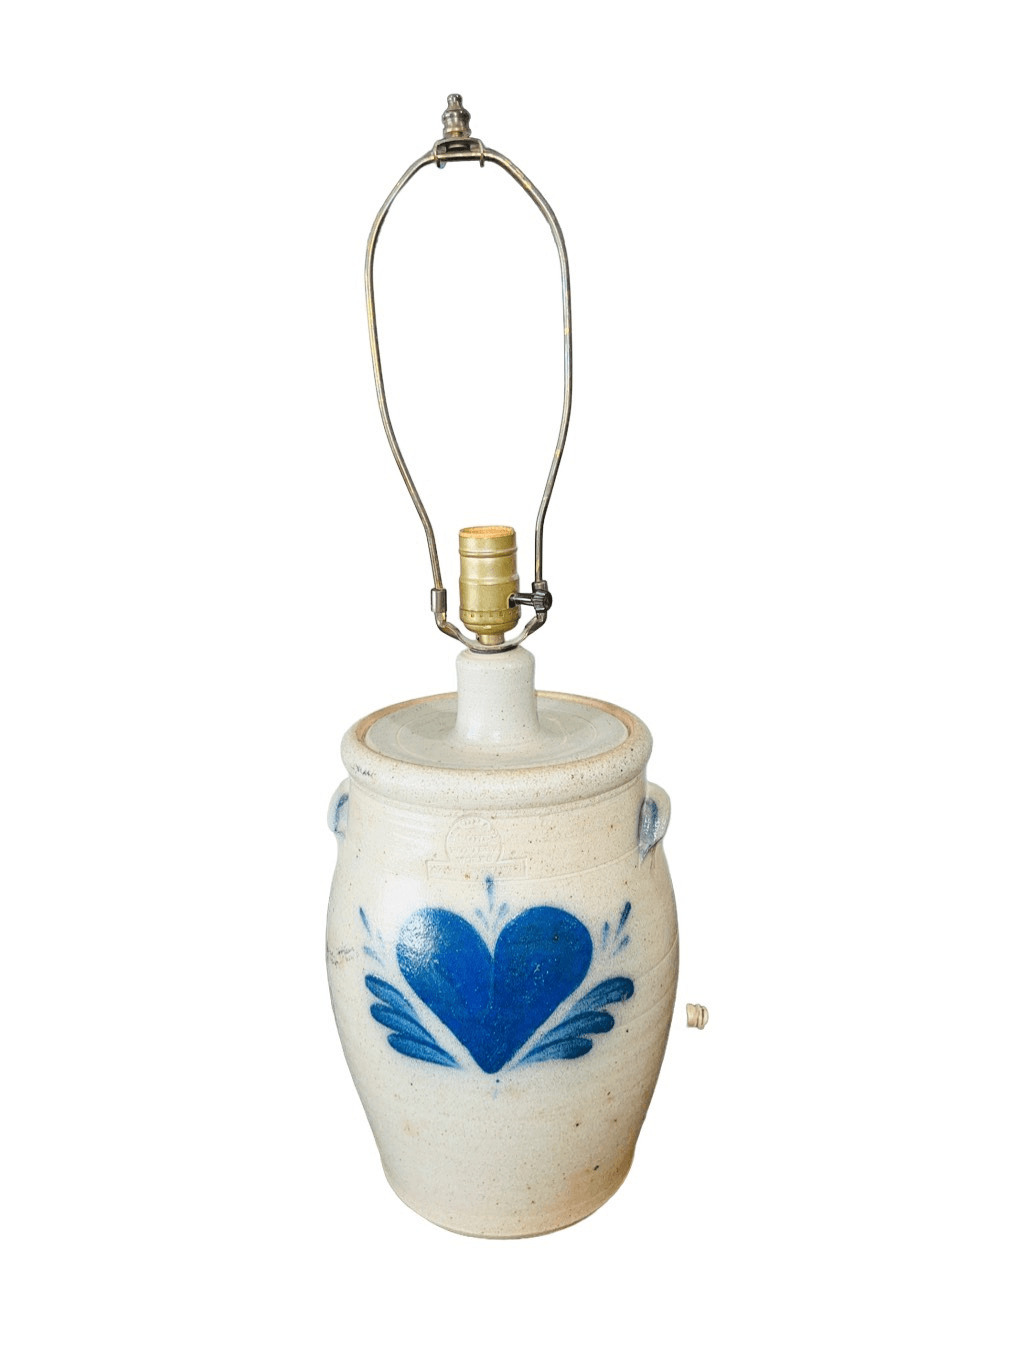 Vintage Rowe Pottery Works Stamped Blue Heart Crock Hand Thrown Salt Glaze Lamp